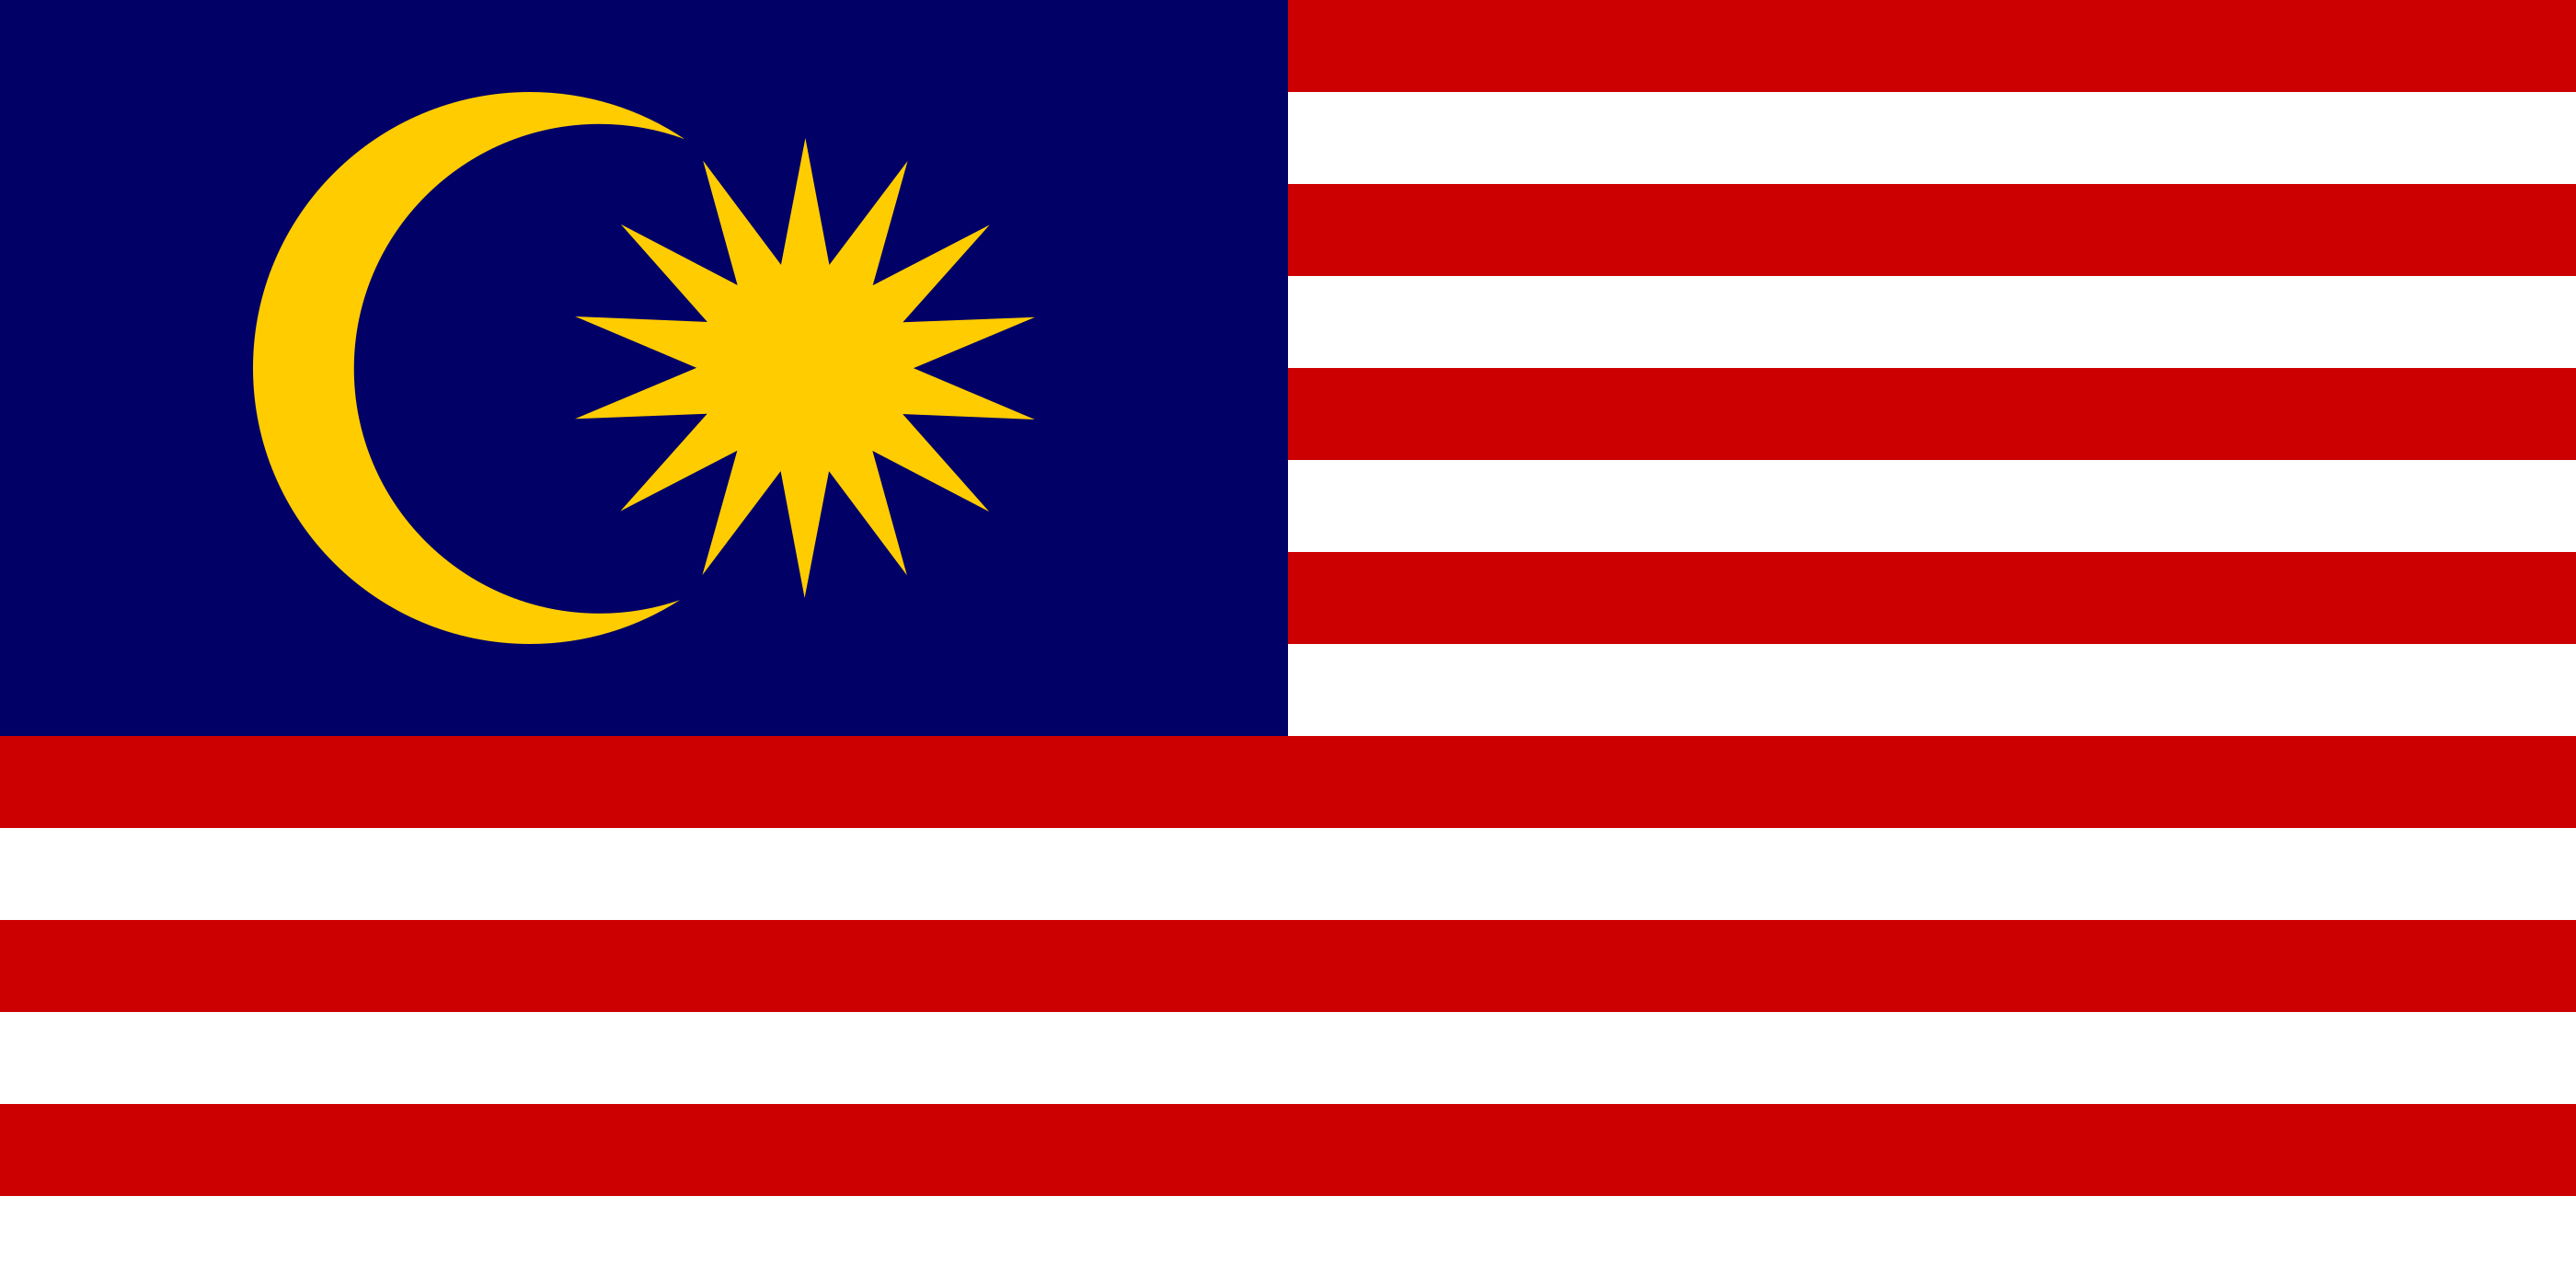 banca bitcoin negara malaysia